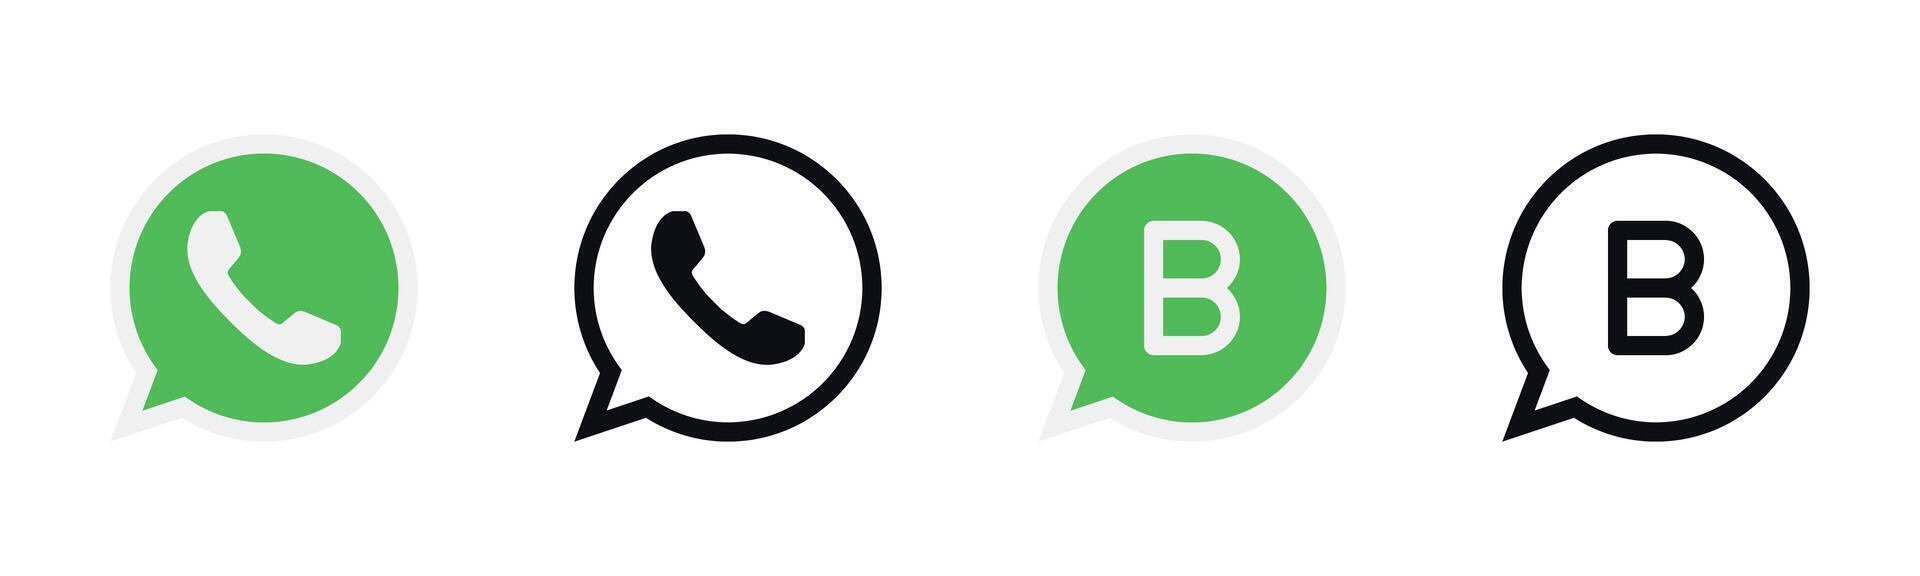 WhatsApp and WhatsApp Business Logo Icon - Messaging App Symbol vector